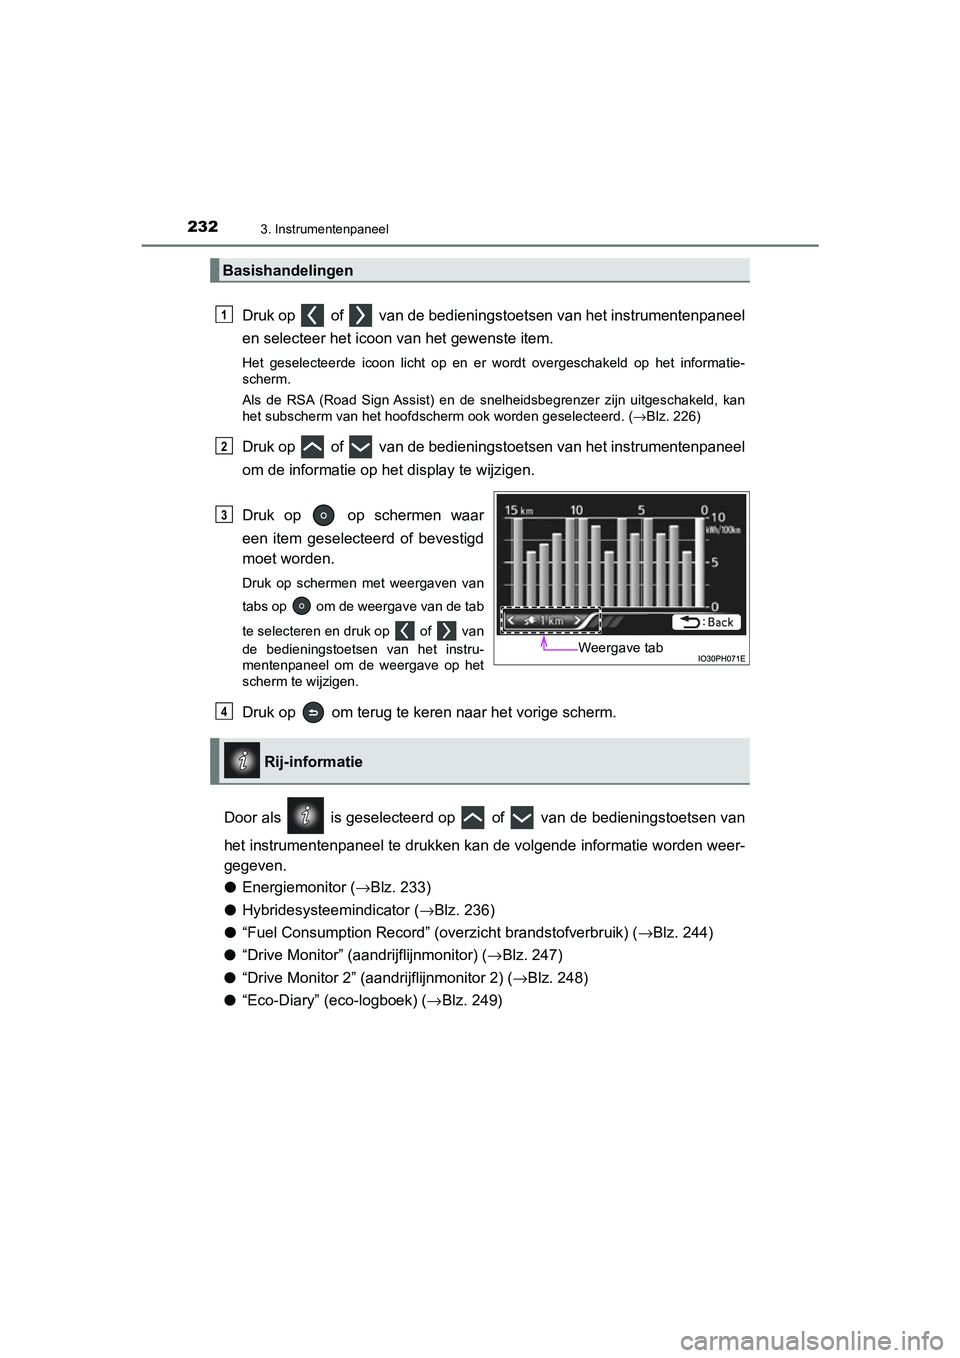 TOYOTA PRIUS PLUG-IN HYBRID 2020  Instructieboekje (in Dutch) 2323. Instrumentenpaneel
Prius Plug-in Hybrid_OM_OM47D72E_(EE)
Druk op   of   van de bedieningstoetsen van het instrumentenpaneel
en selecteer het icoon van het gewenste item.
Het geselecteerde icoon 